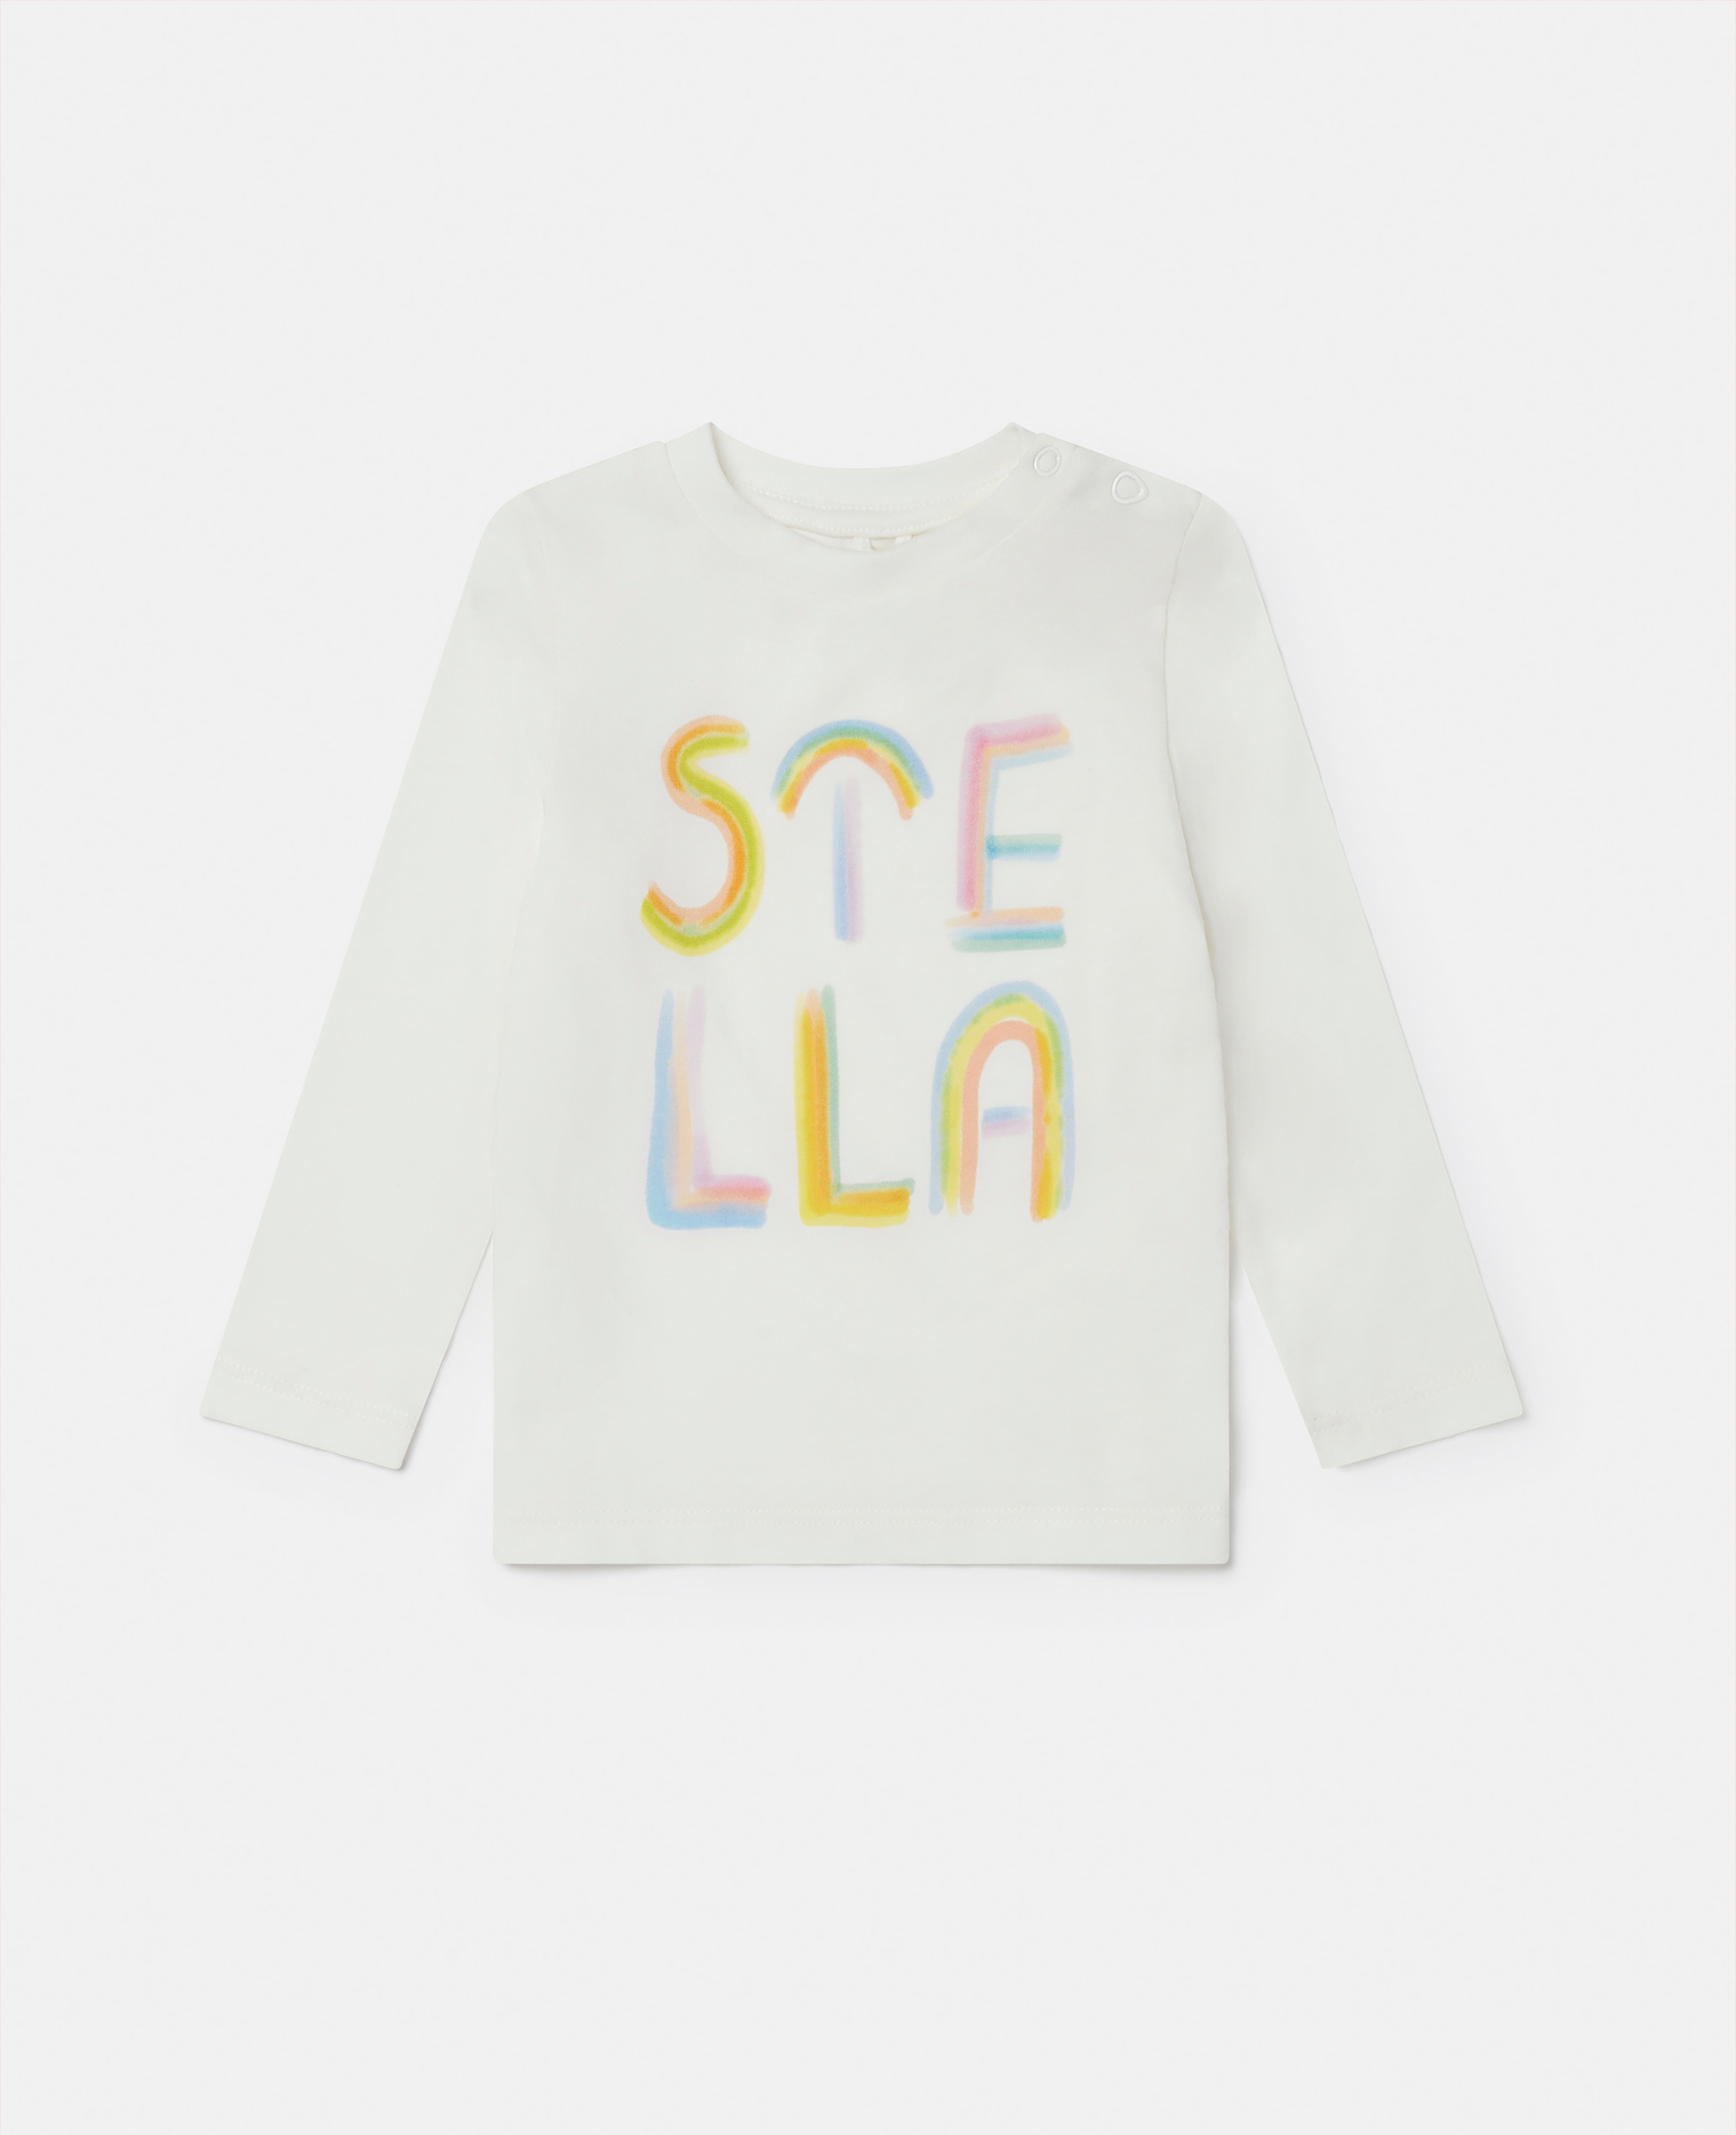 stella mccartney - stella logo rainbow long sleeve t-shirt, woman, cream, size: 12m